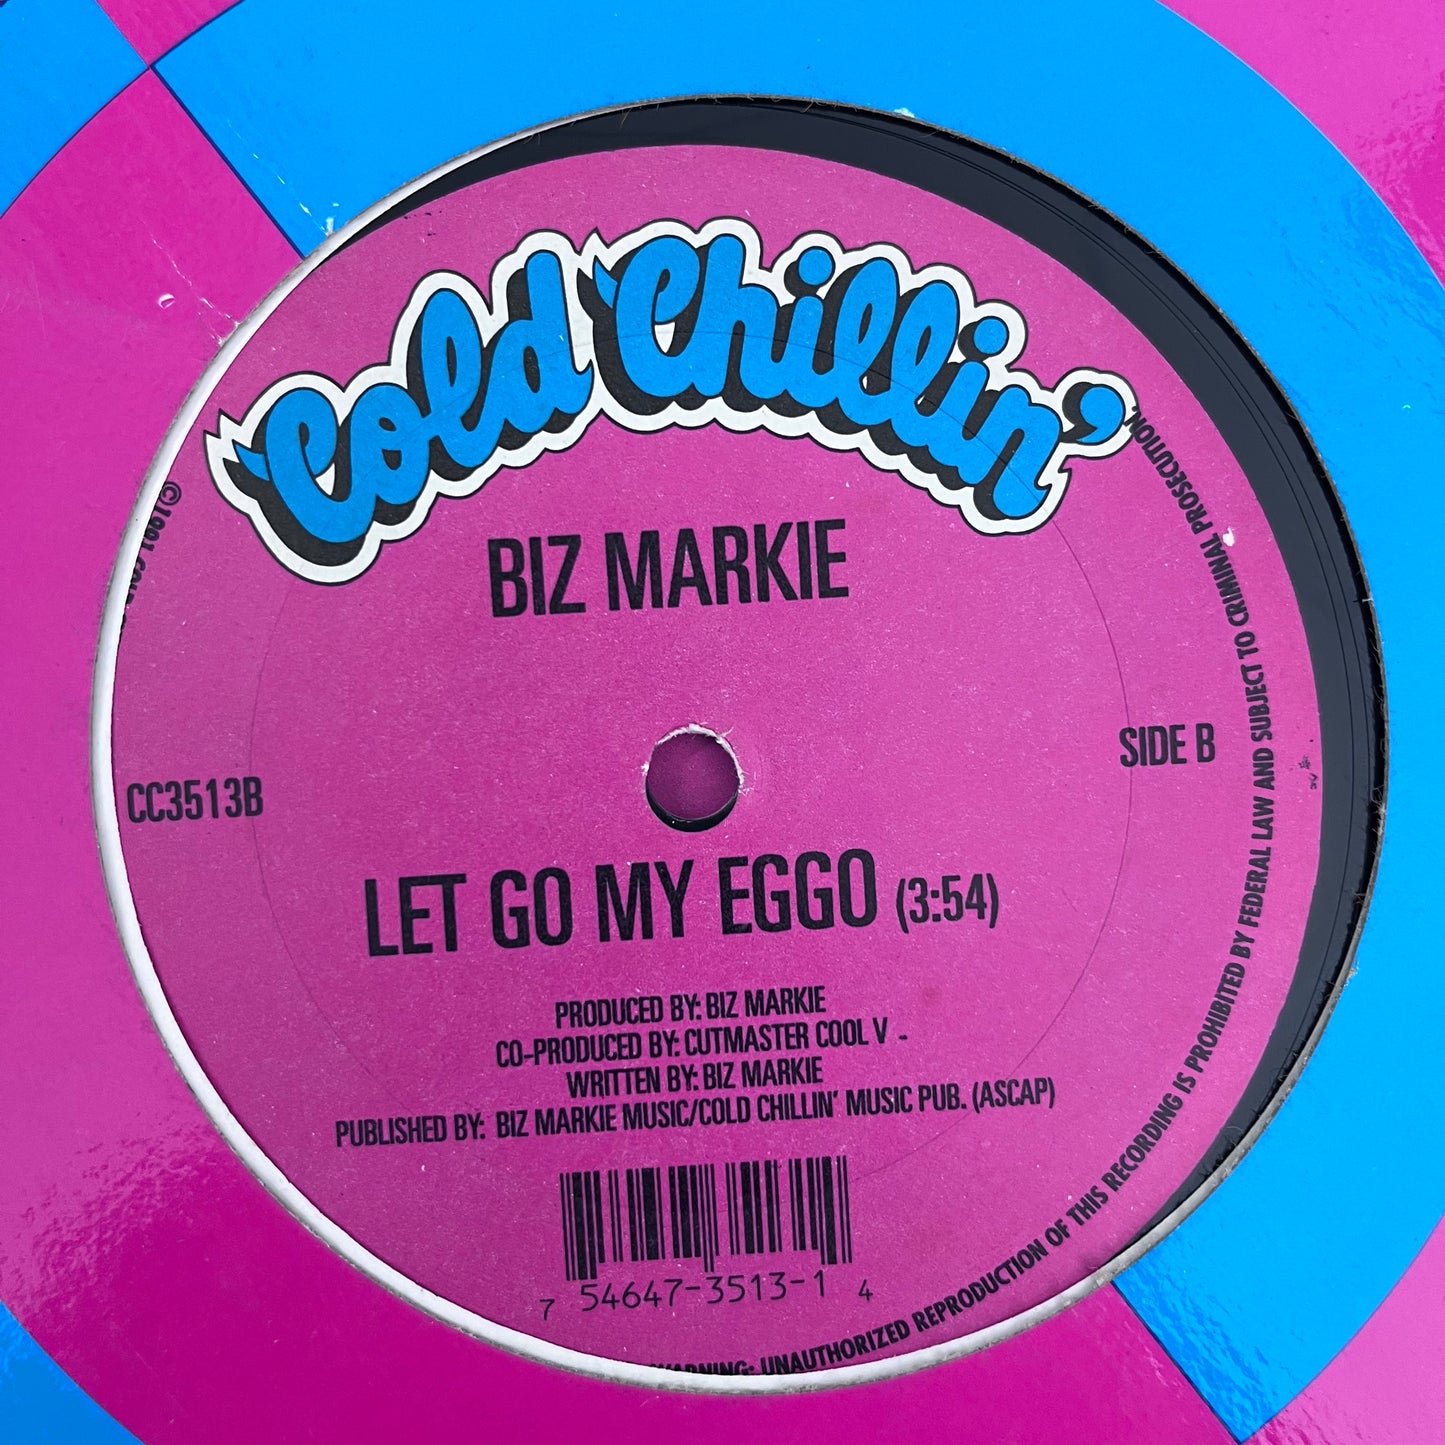 Biz Markie “Just Rhymin’ With Biz” 2 Track 12inch Vinyl Record on Cold Chillin Records